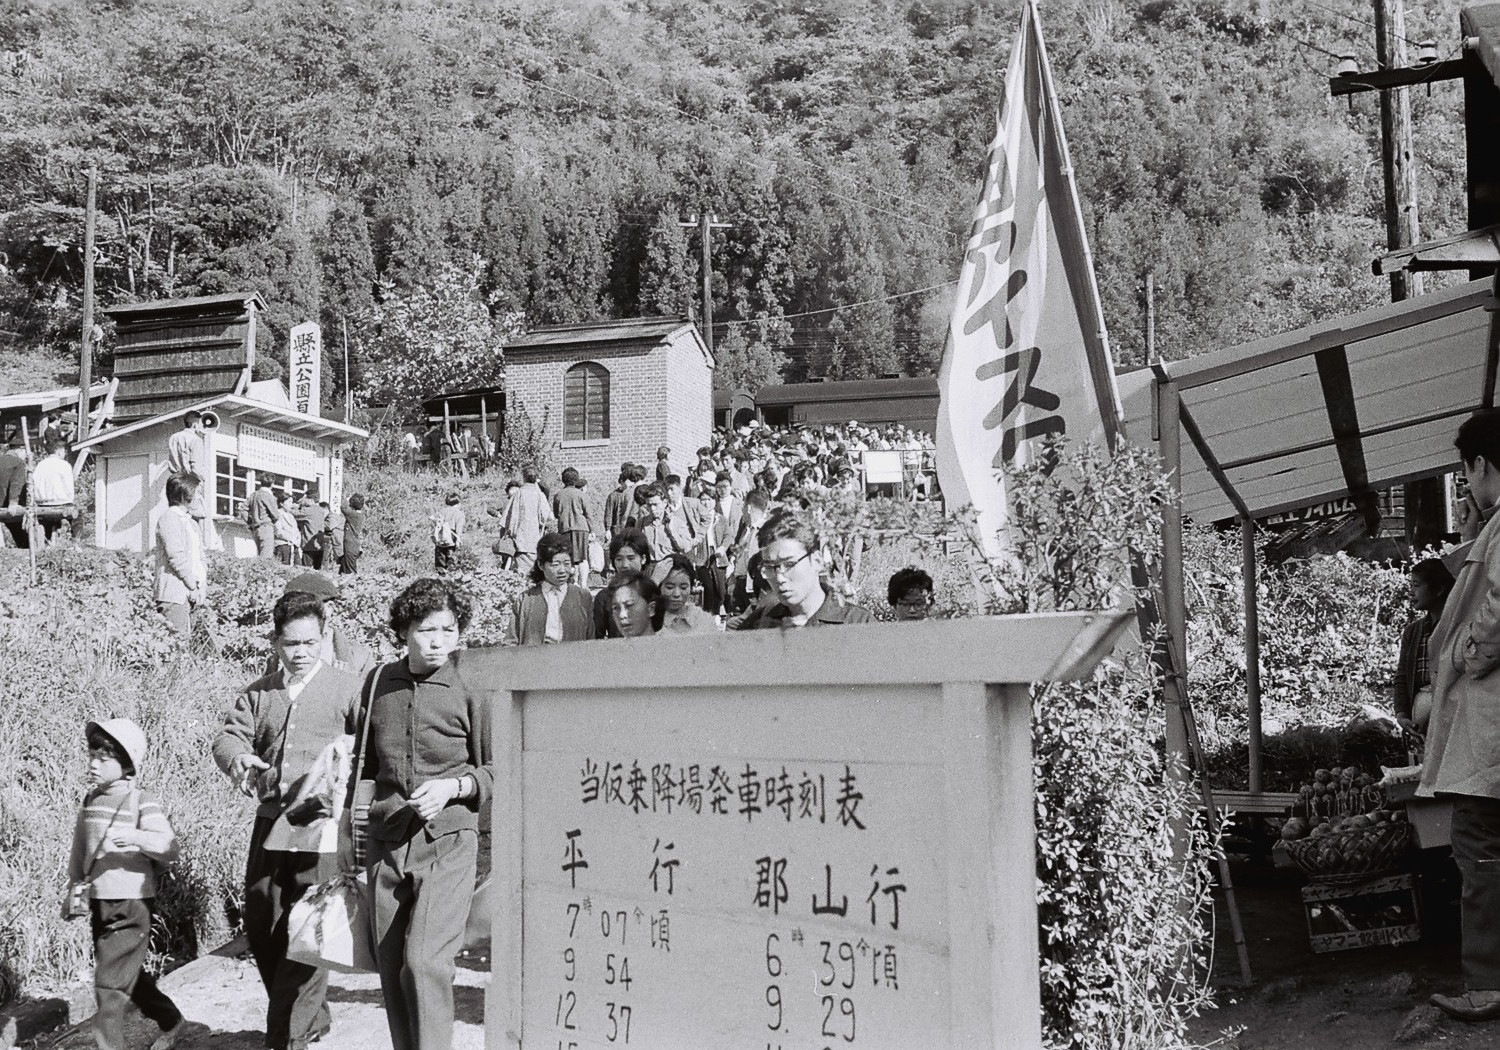 06 江田仮乗降場で降車する人々(昭和30年代、国府田英二氏提供)